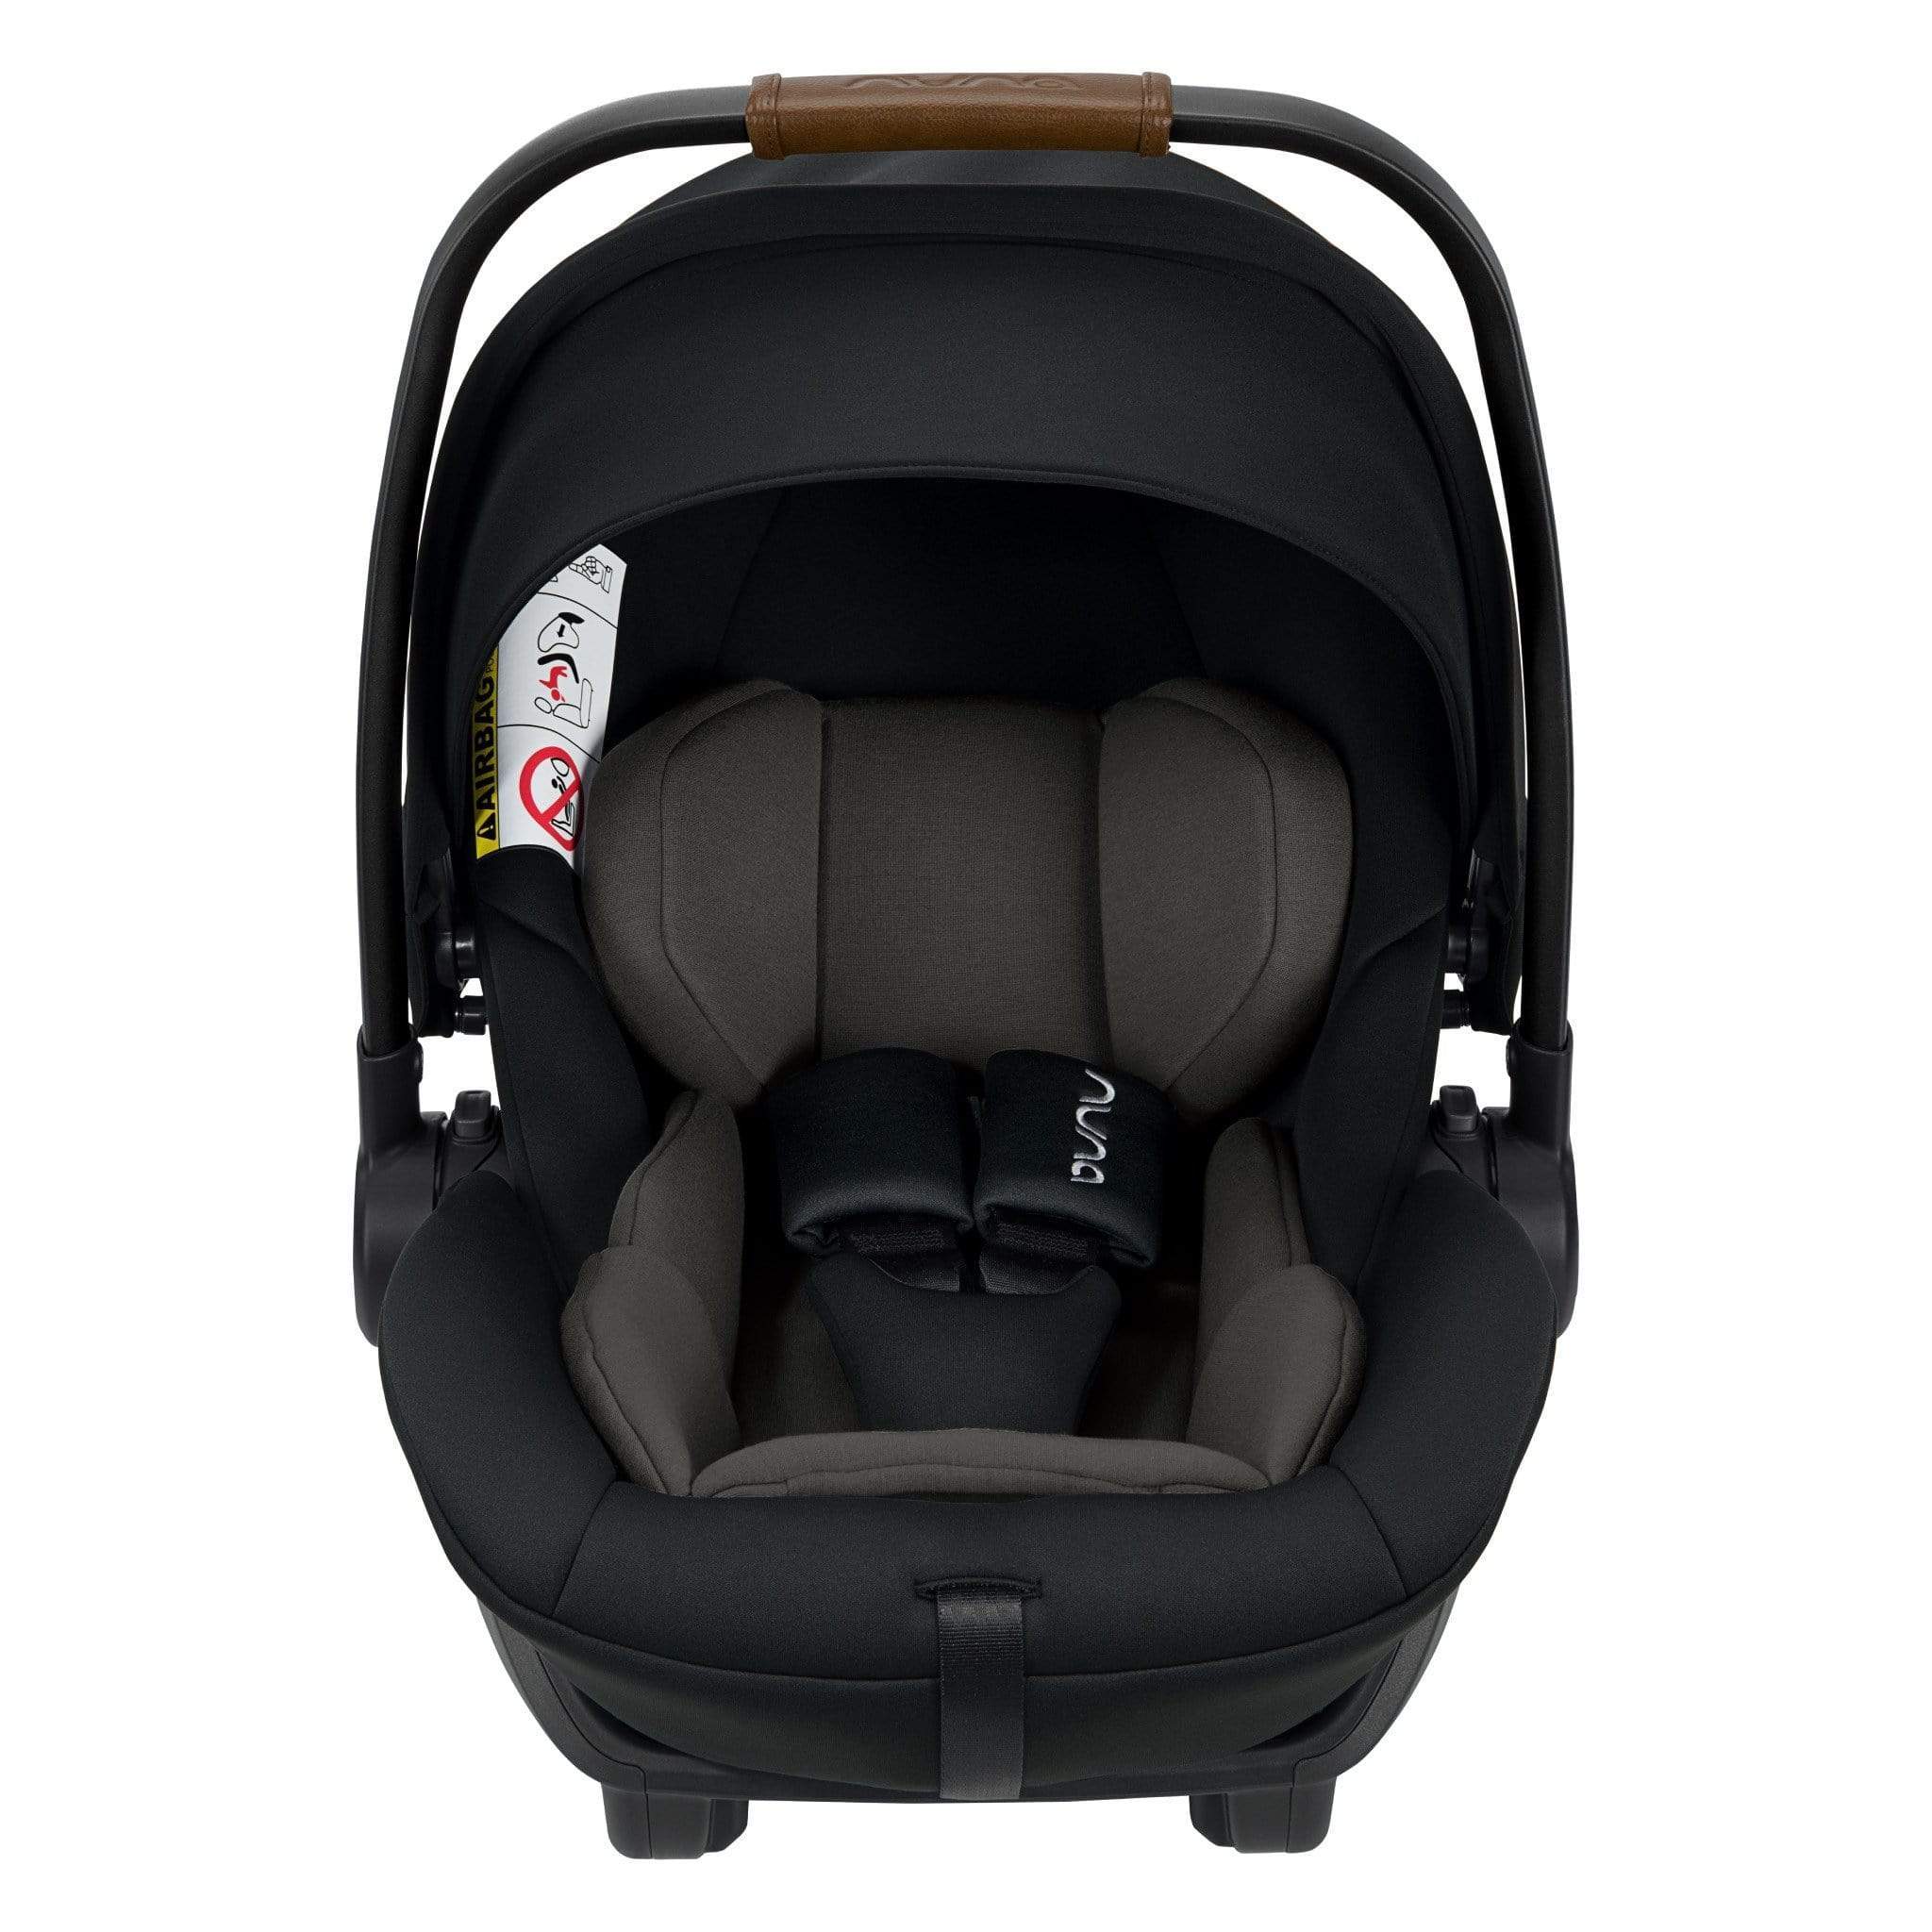 Nuna ARRA Next & BASE Next Bundle Baby Car Seats